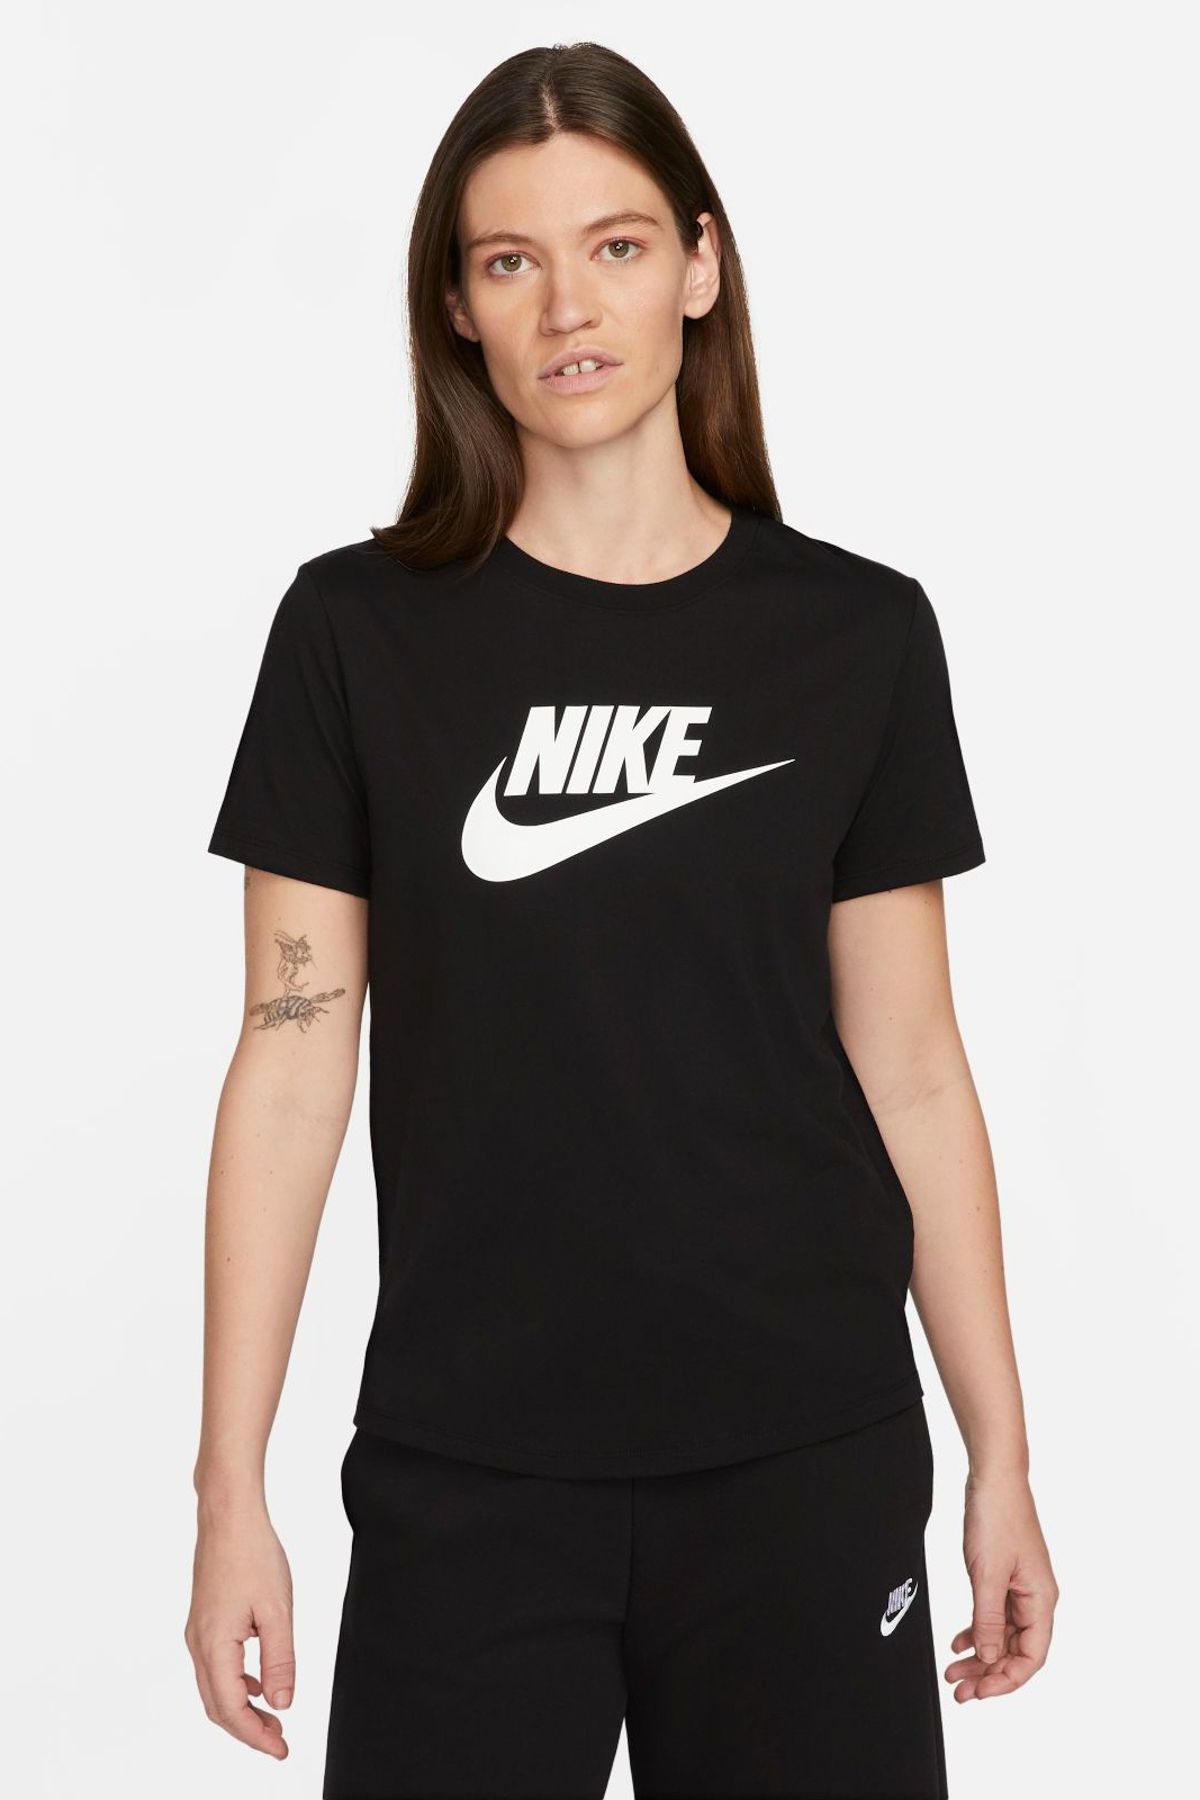 Nike Tee Dri Fit Tank Top Cotton Strappy Black Women's Athlete - Trendyol